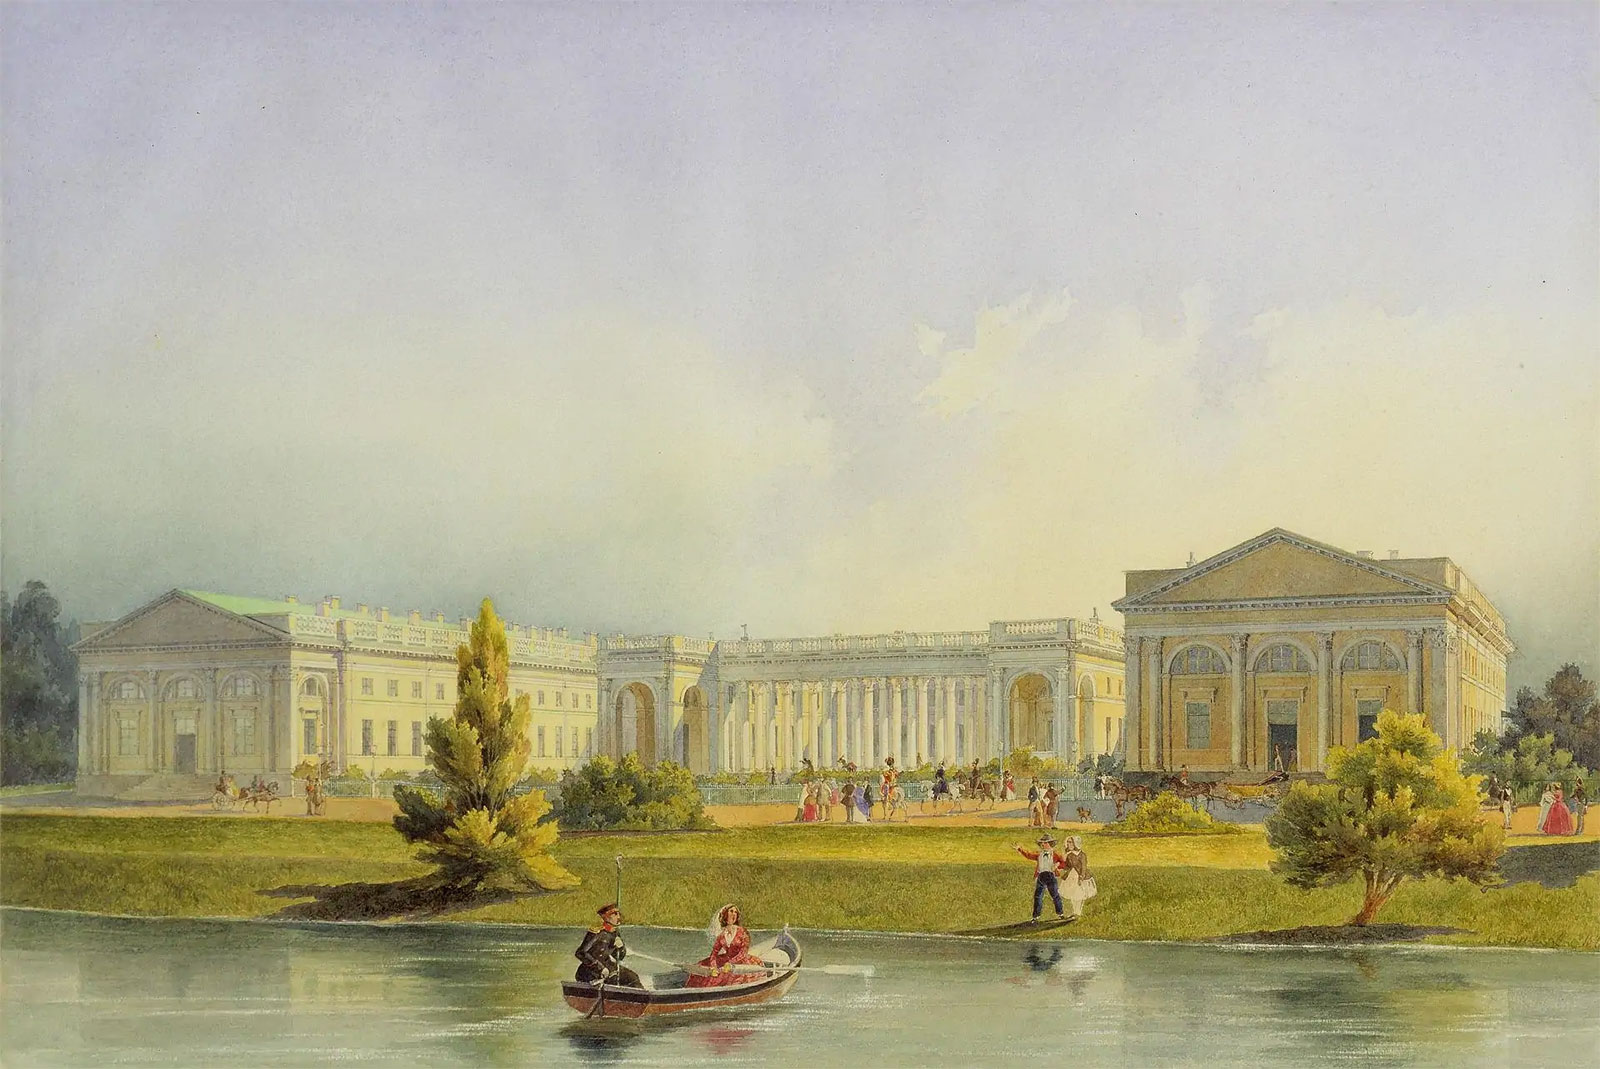 Александровский дворец в Царском селе, 1847, картина художника Горностаева А.М.